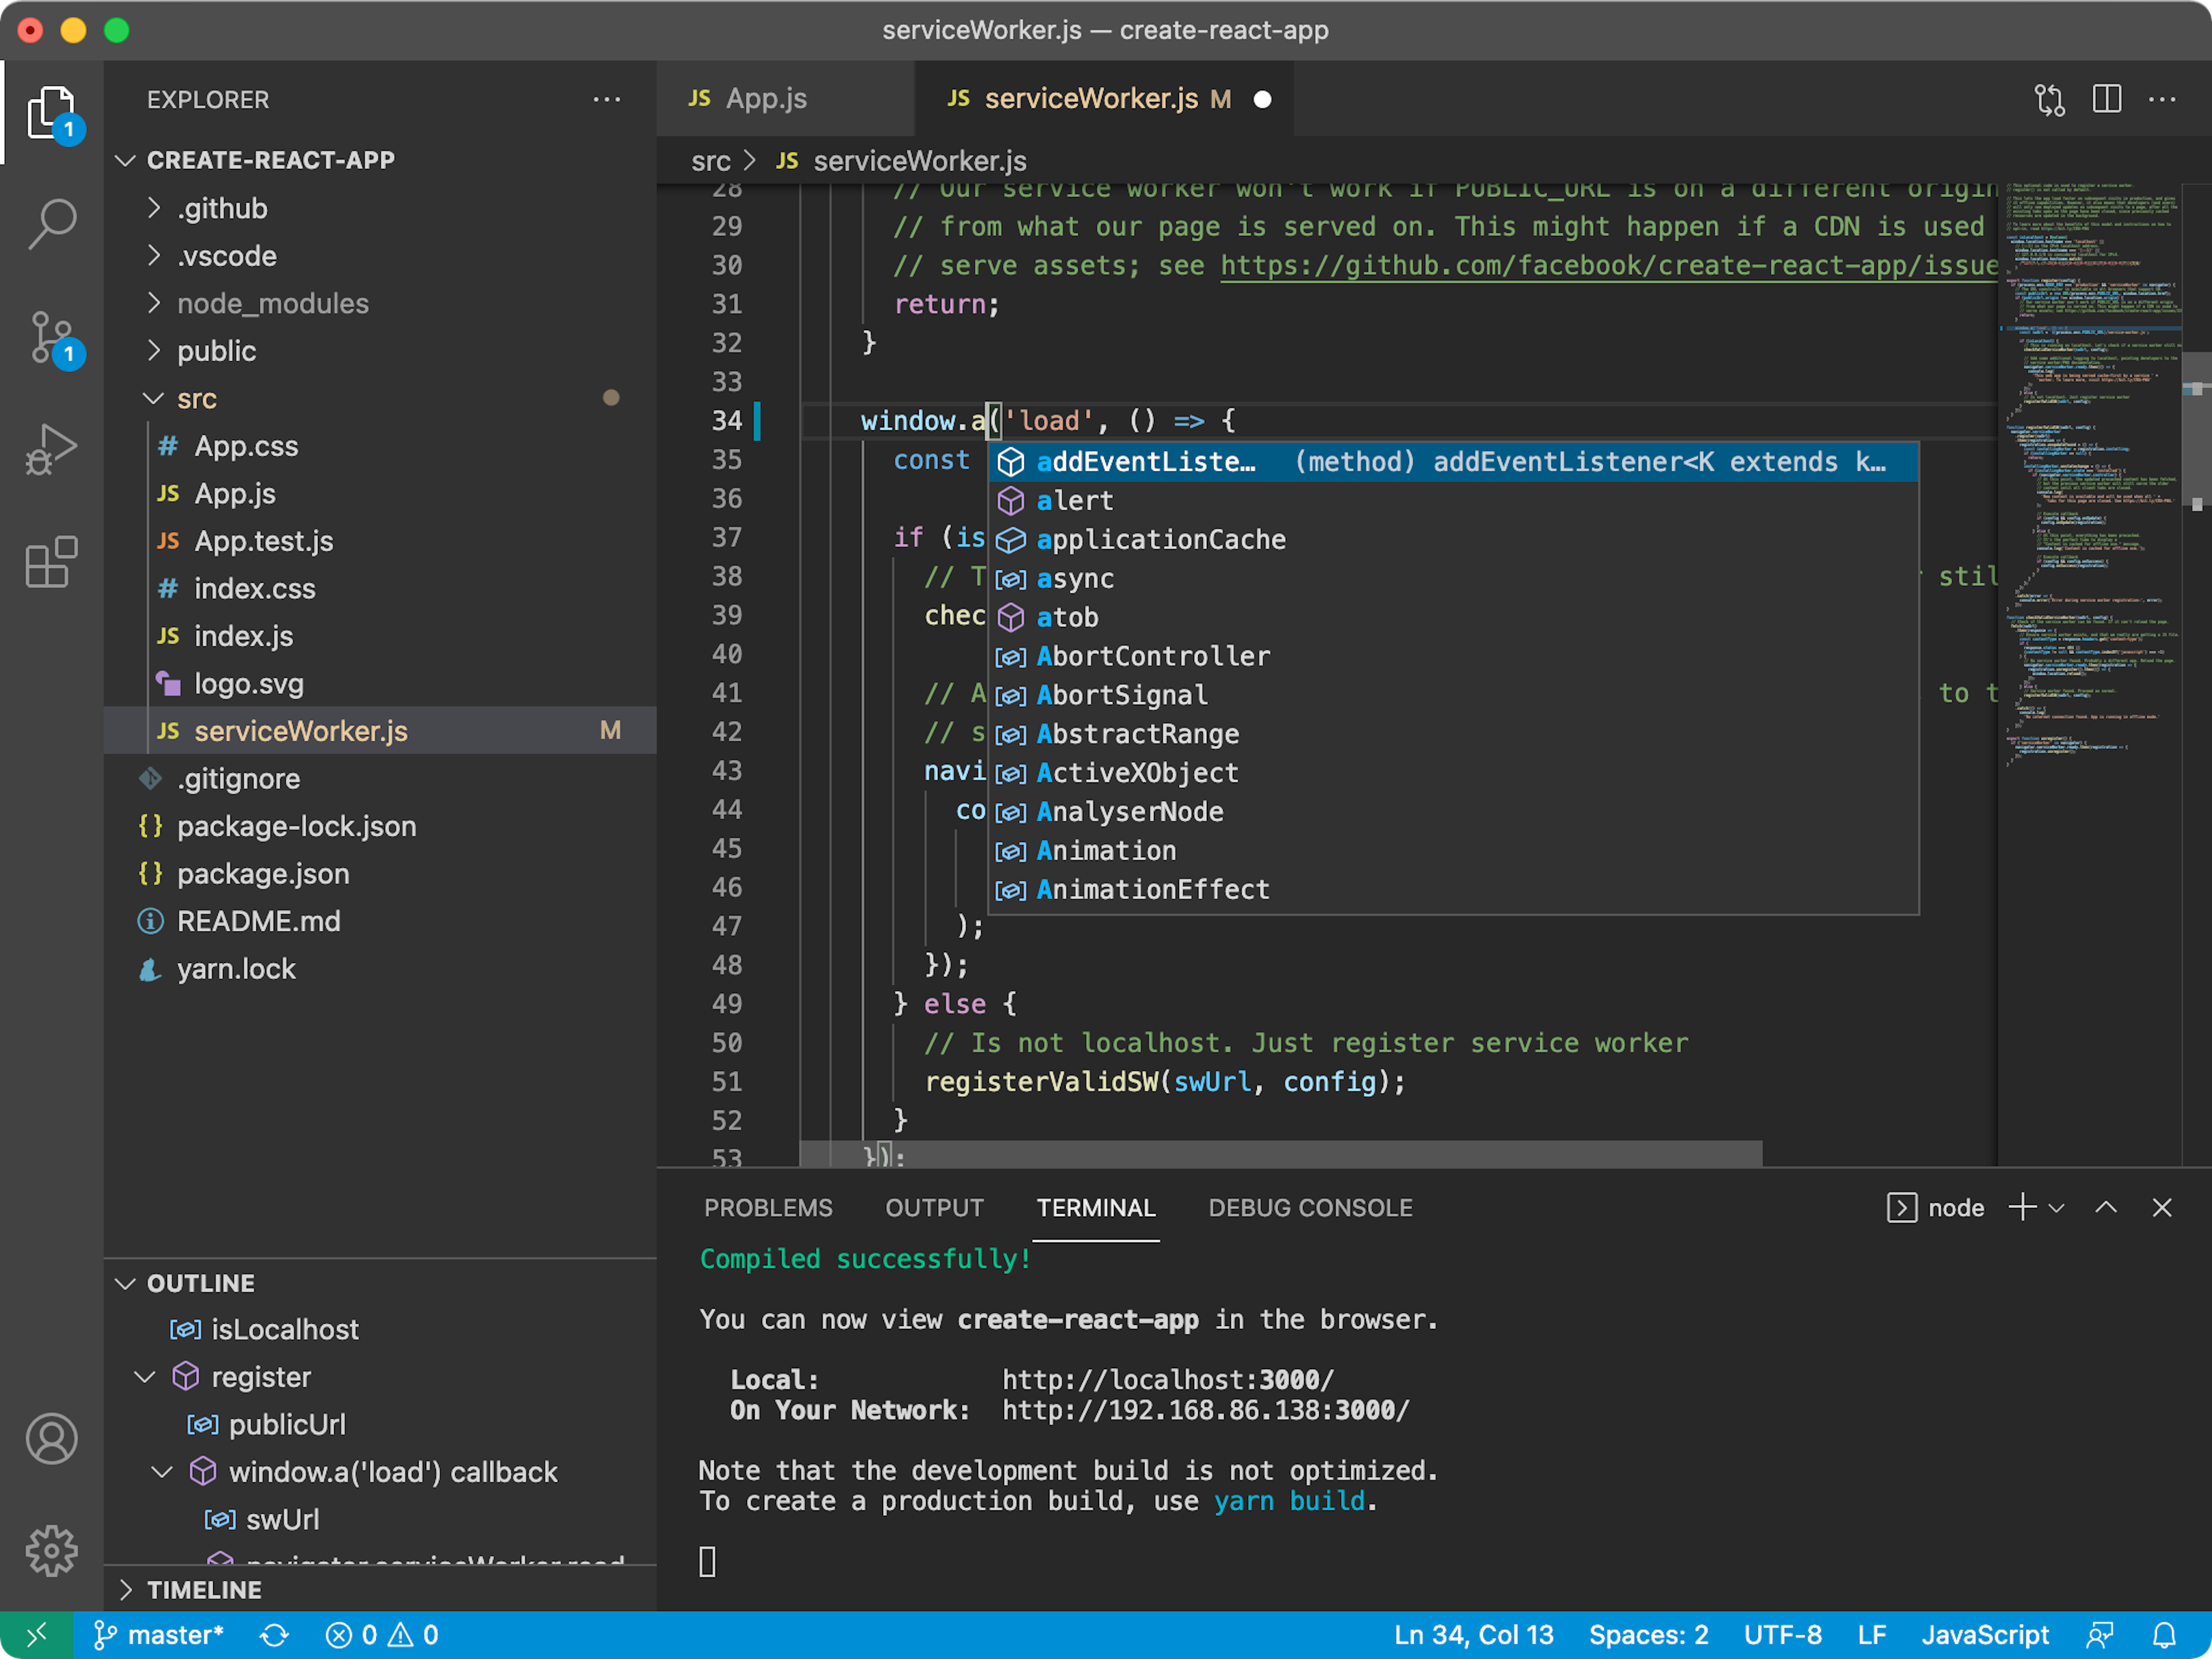 A screenshot of VS Code